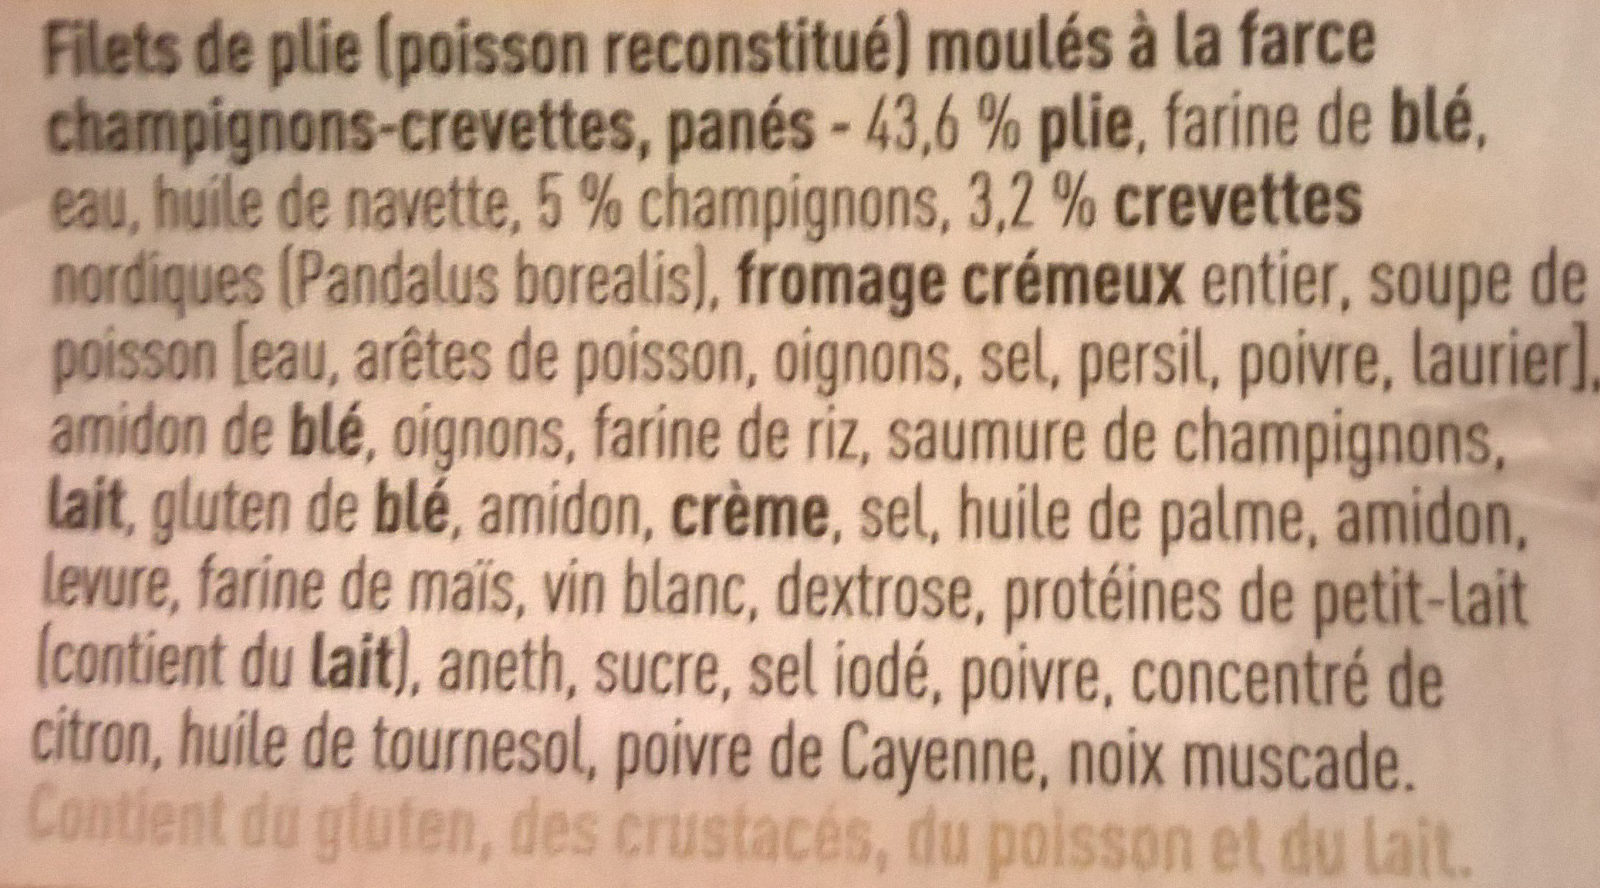 Plie panée farce champignons-crevettes - Ingrediënten - fr